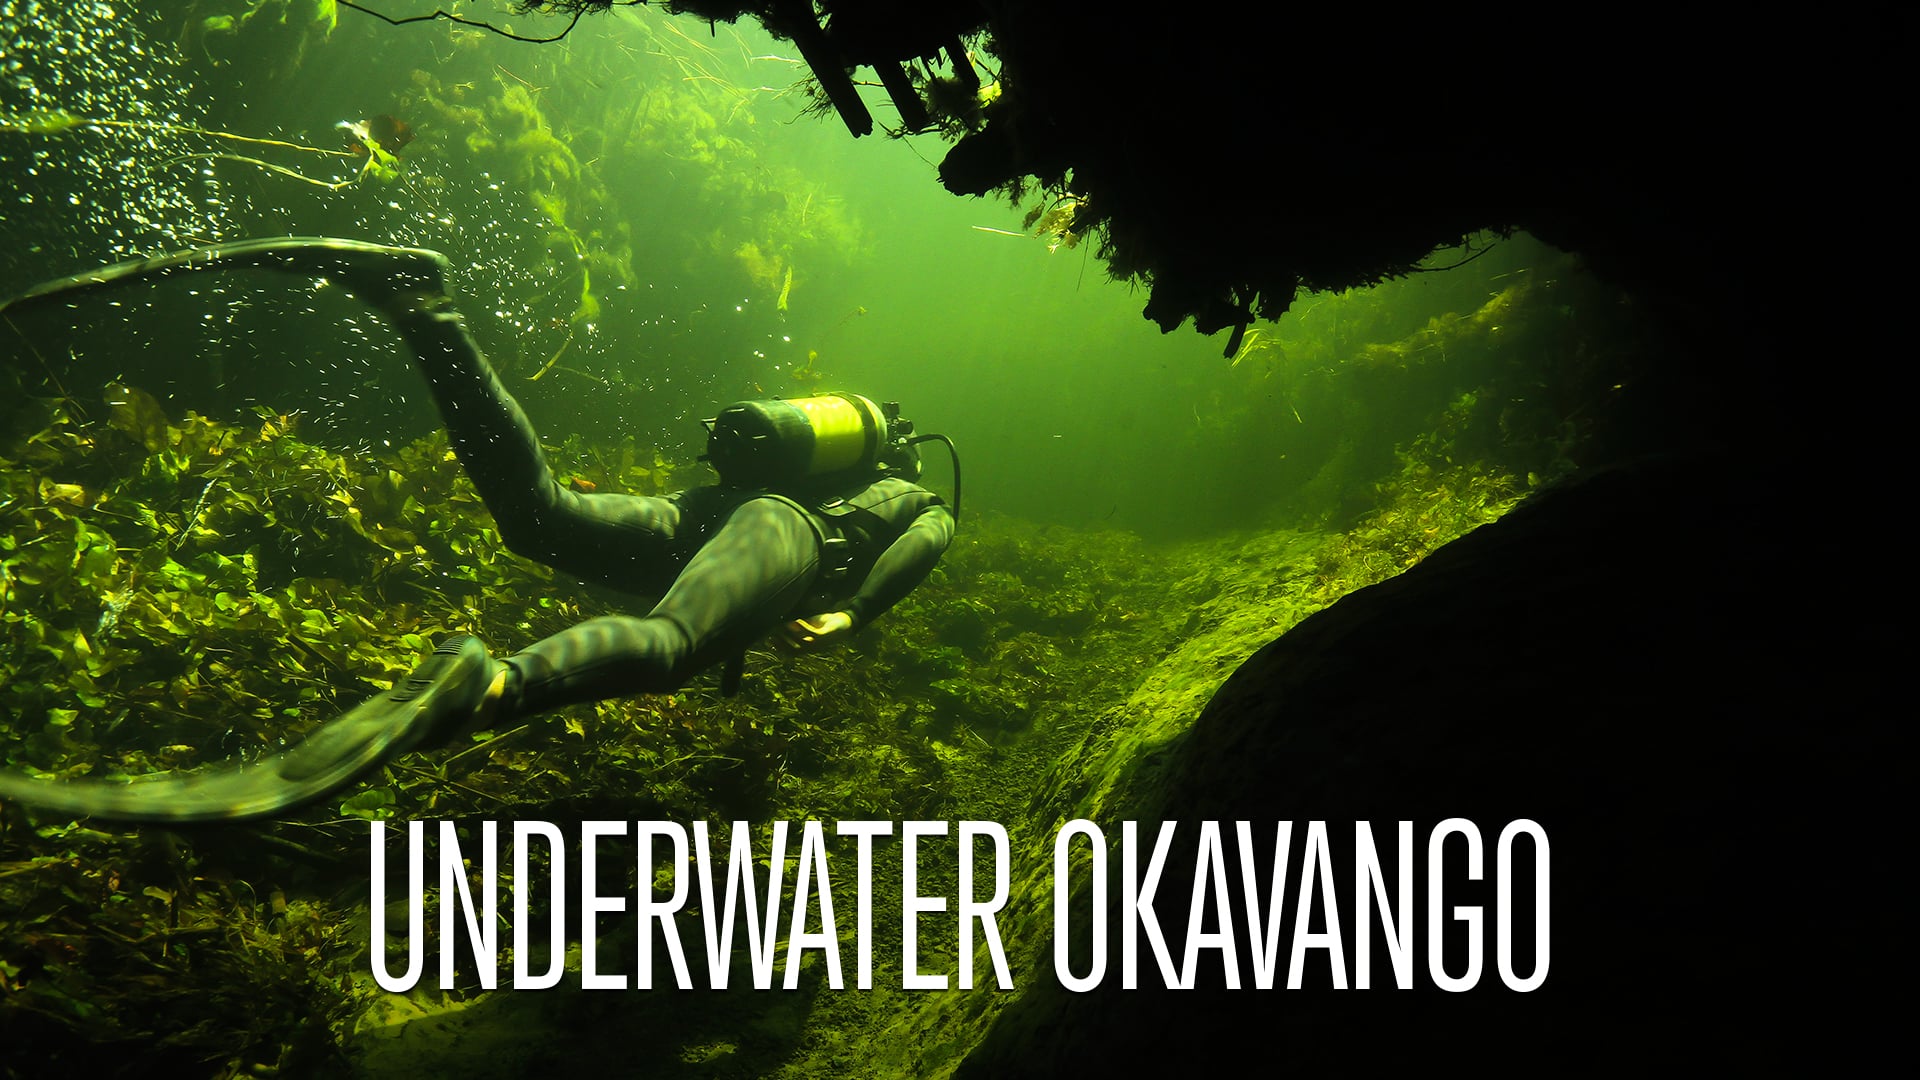 Watch Underwater Okavango Online Vimeo On Demand on Vimeo